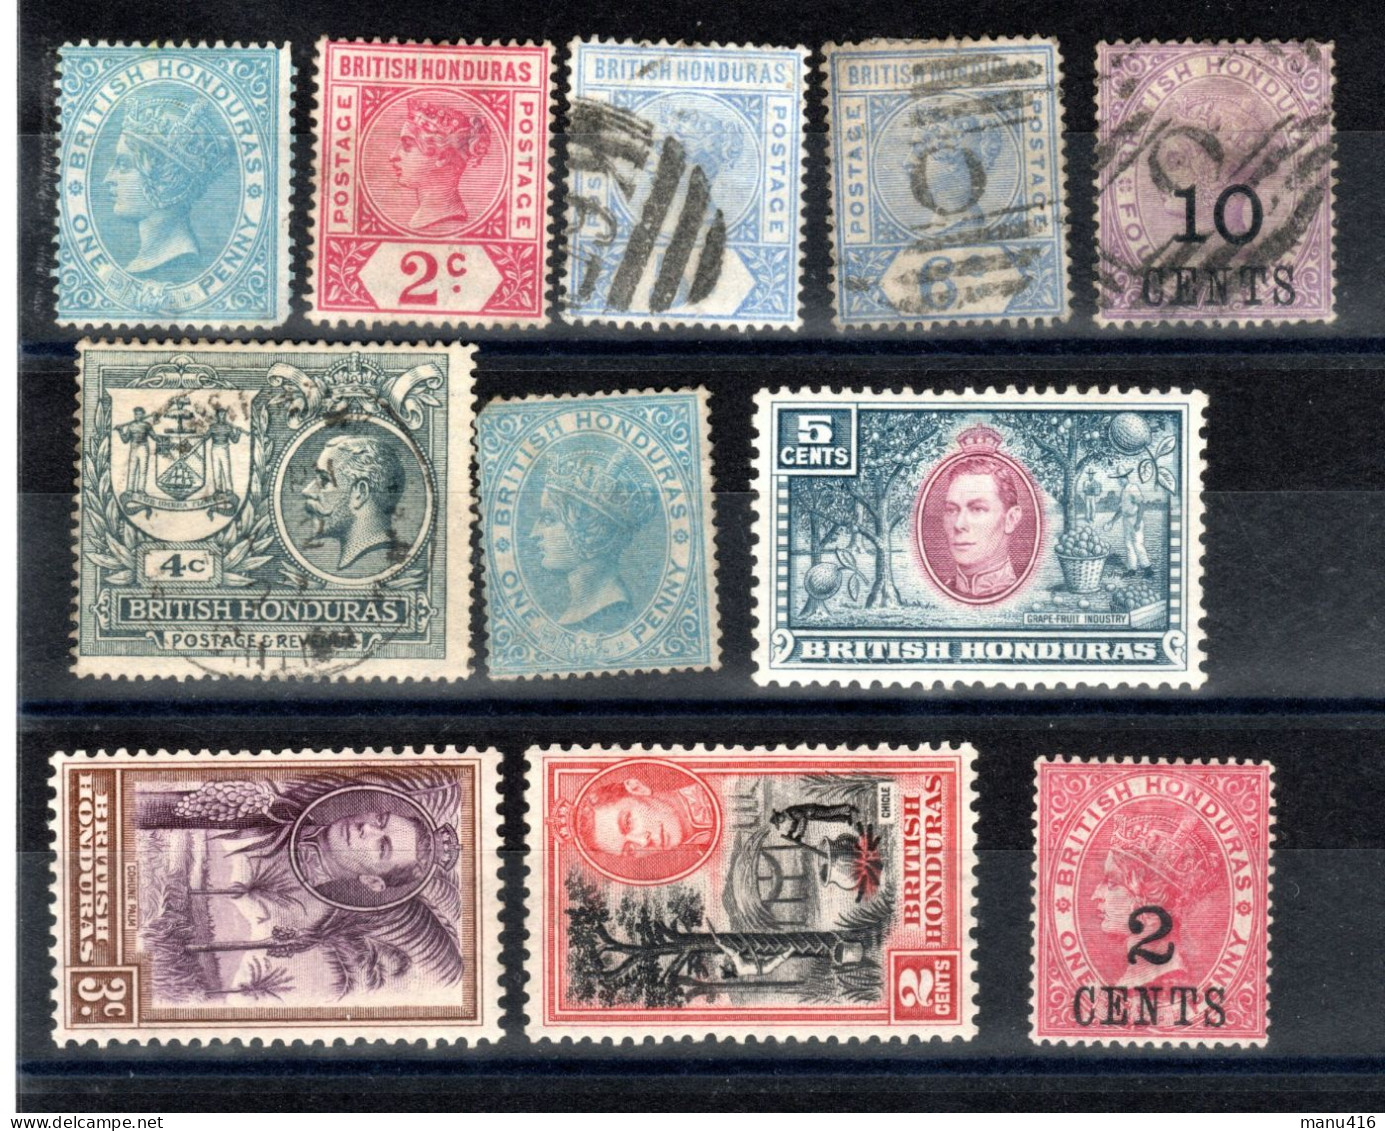 Honduras Britannique 11 Timbres Classiques (très Anciens) Cote + 200 Euros. Port Offert. - British Honduras (...-1970)